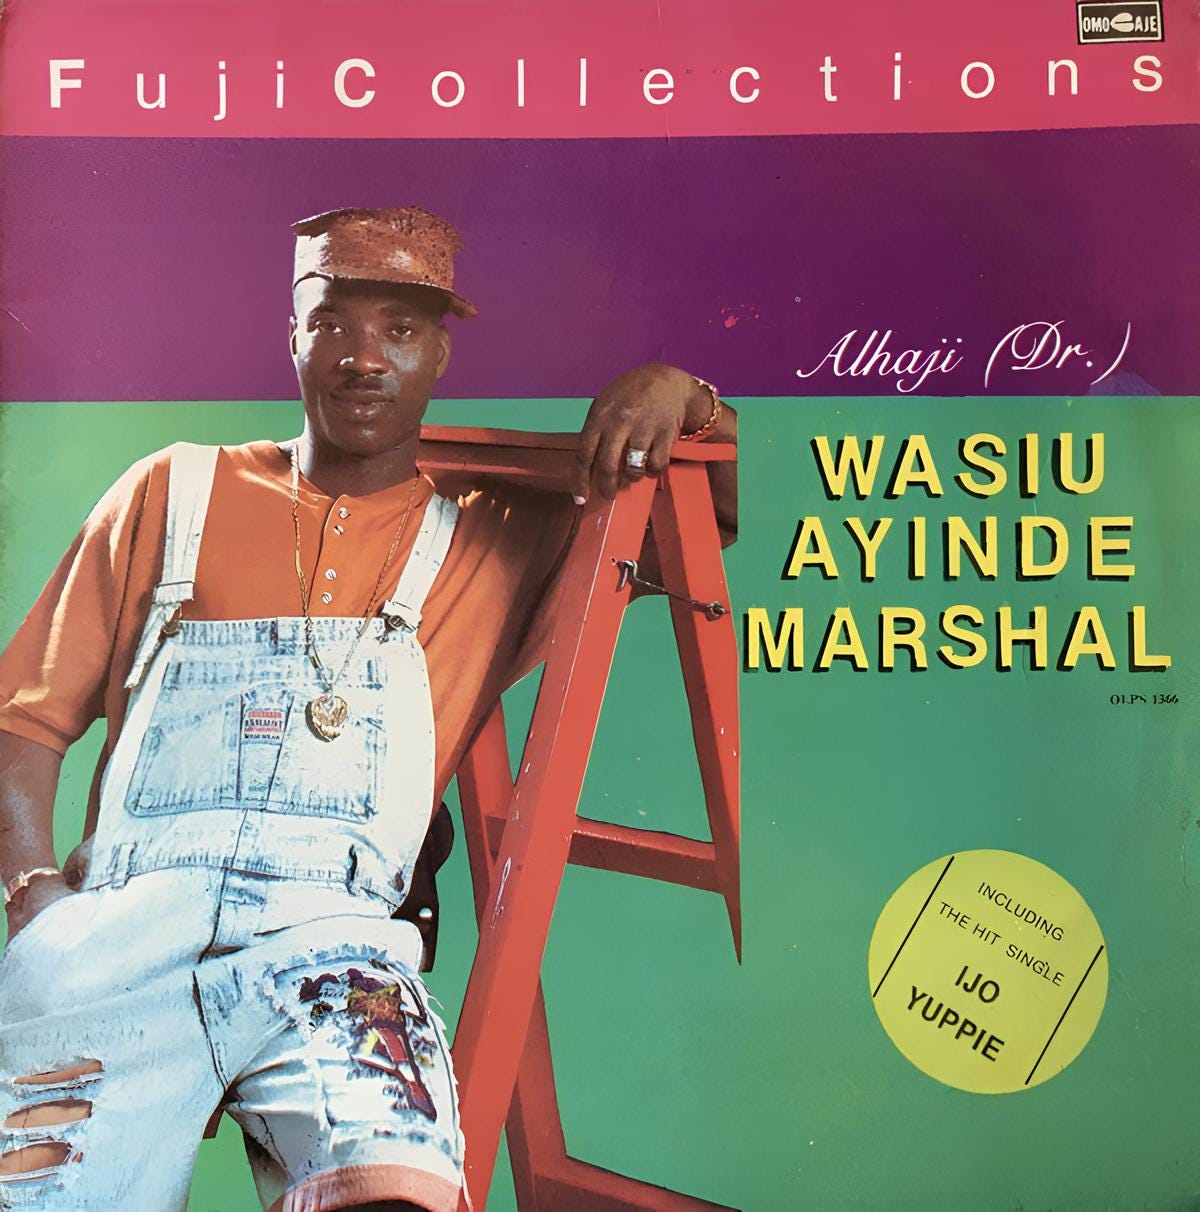 Ibukunola Printers cover art design for Alhaji (Chief) Wasiu Ayinde Marshal 1991 'Fuji Collections' album